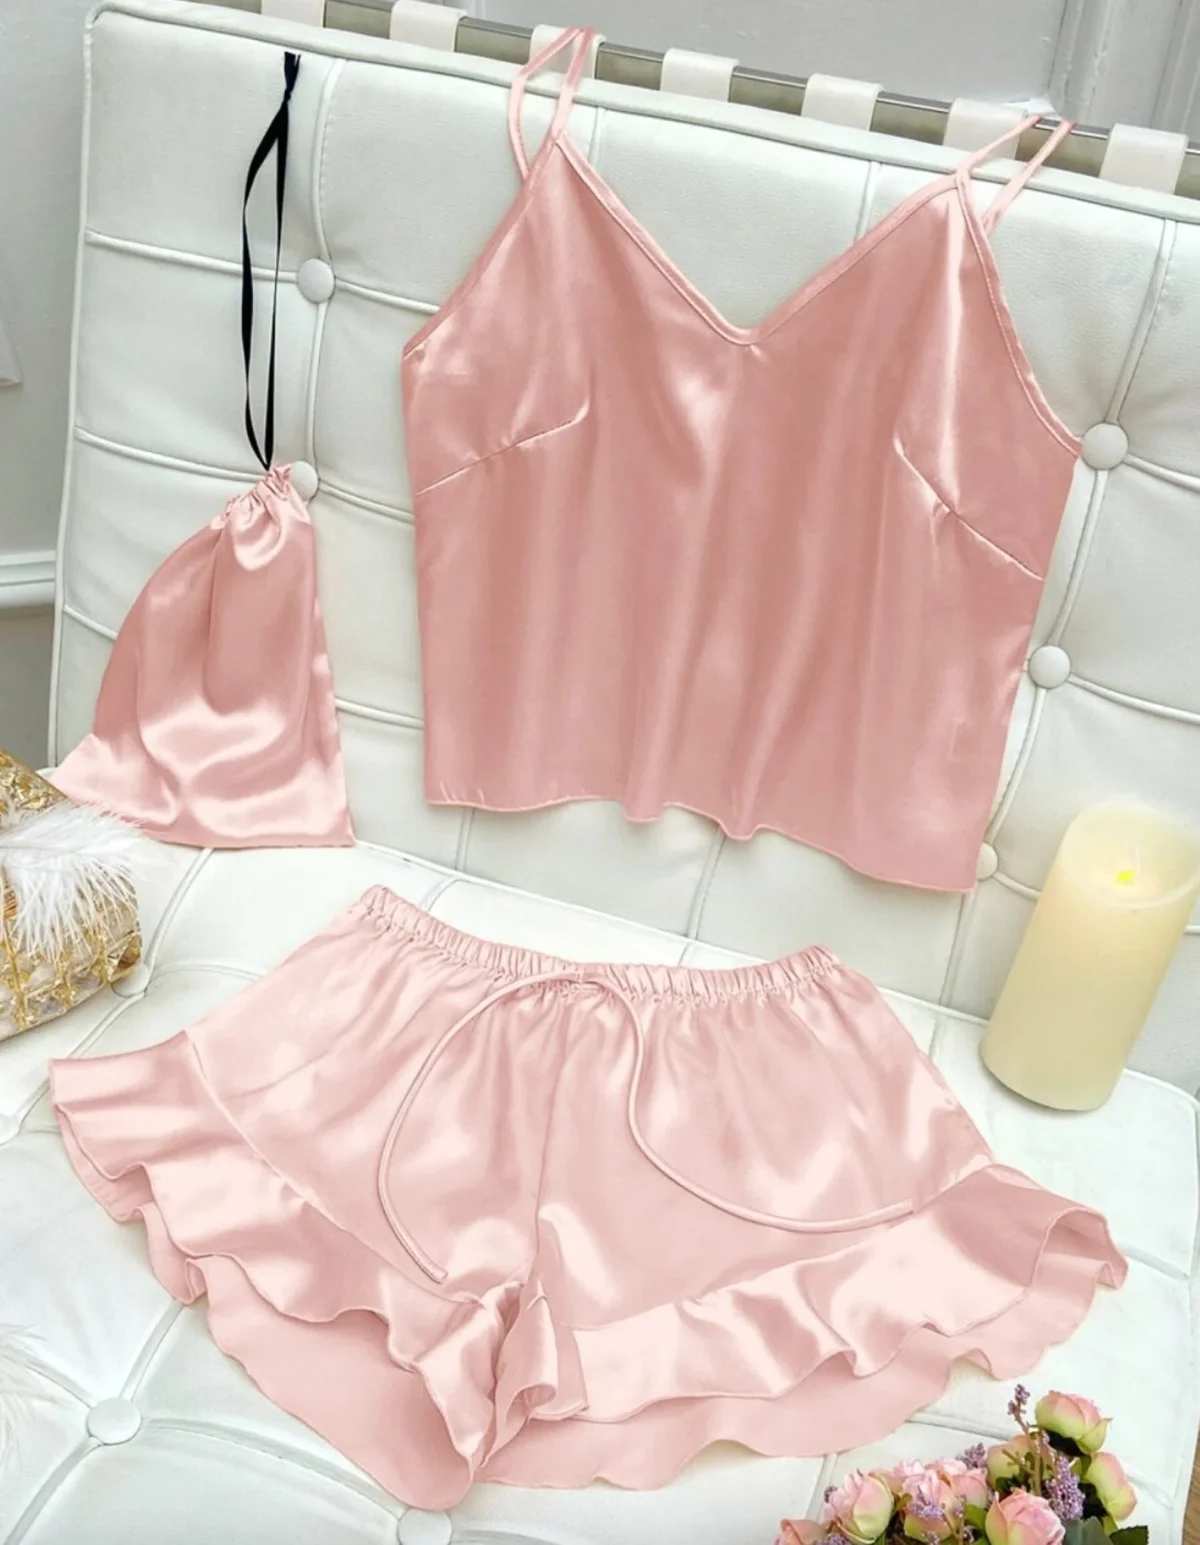 Casual pink lingerie set. | The Dating Divas